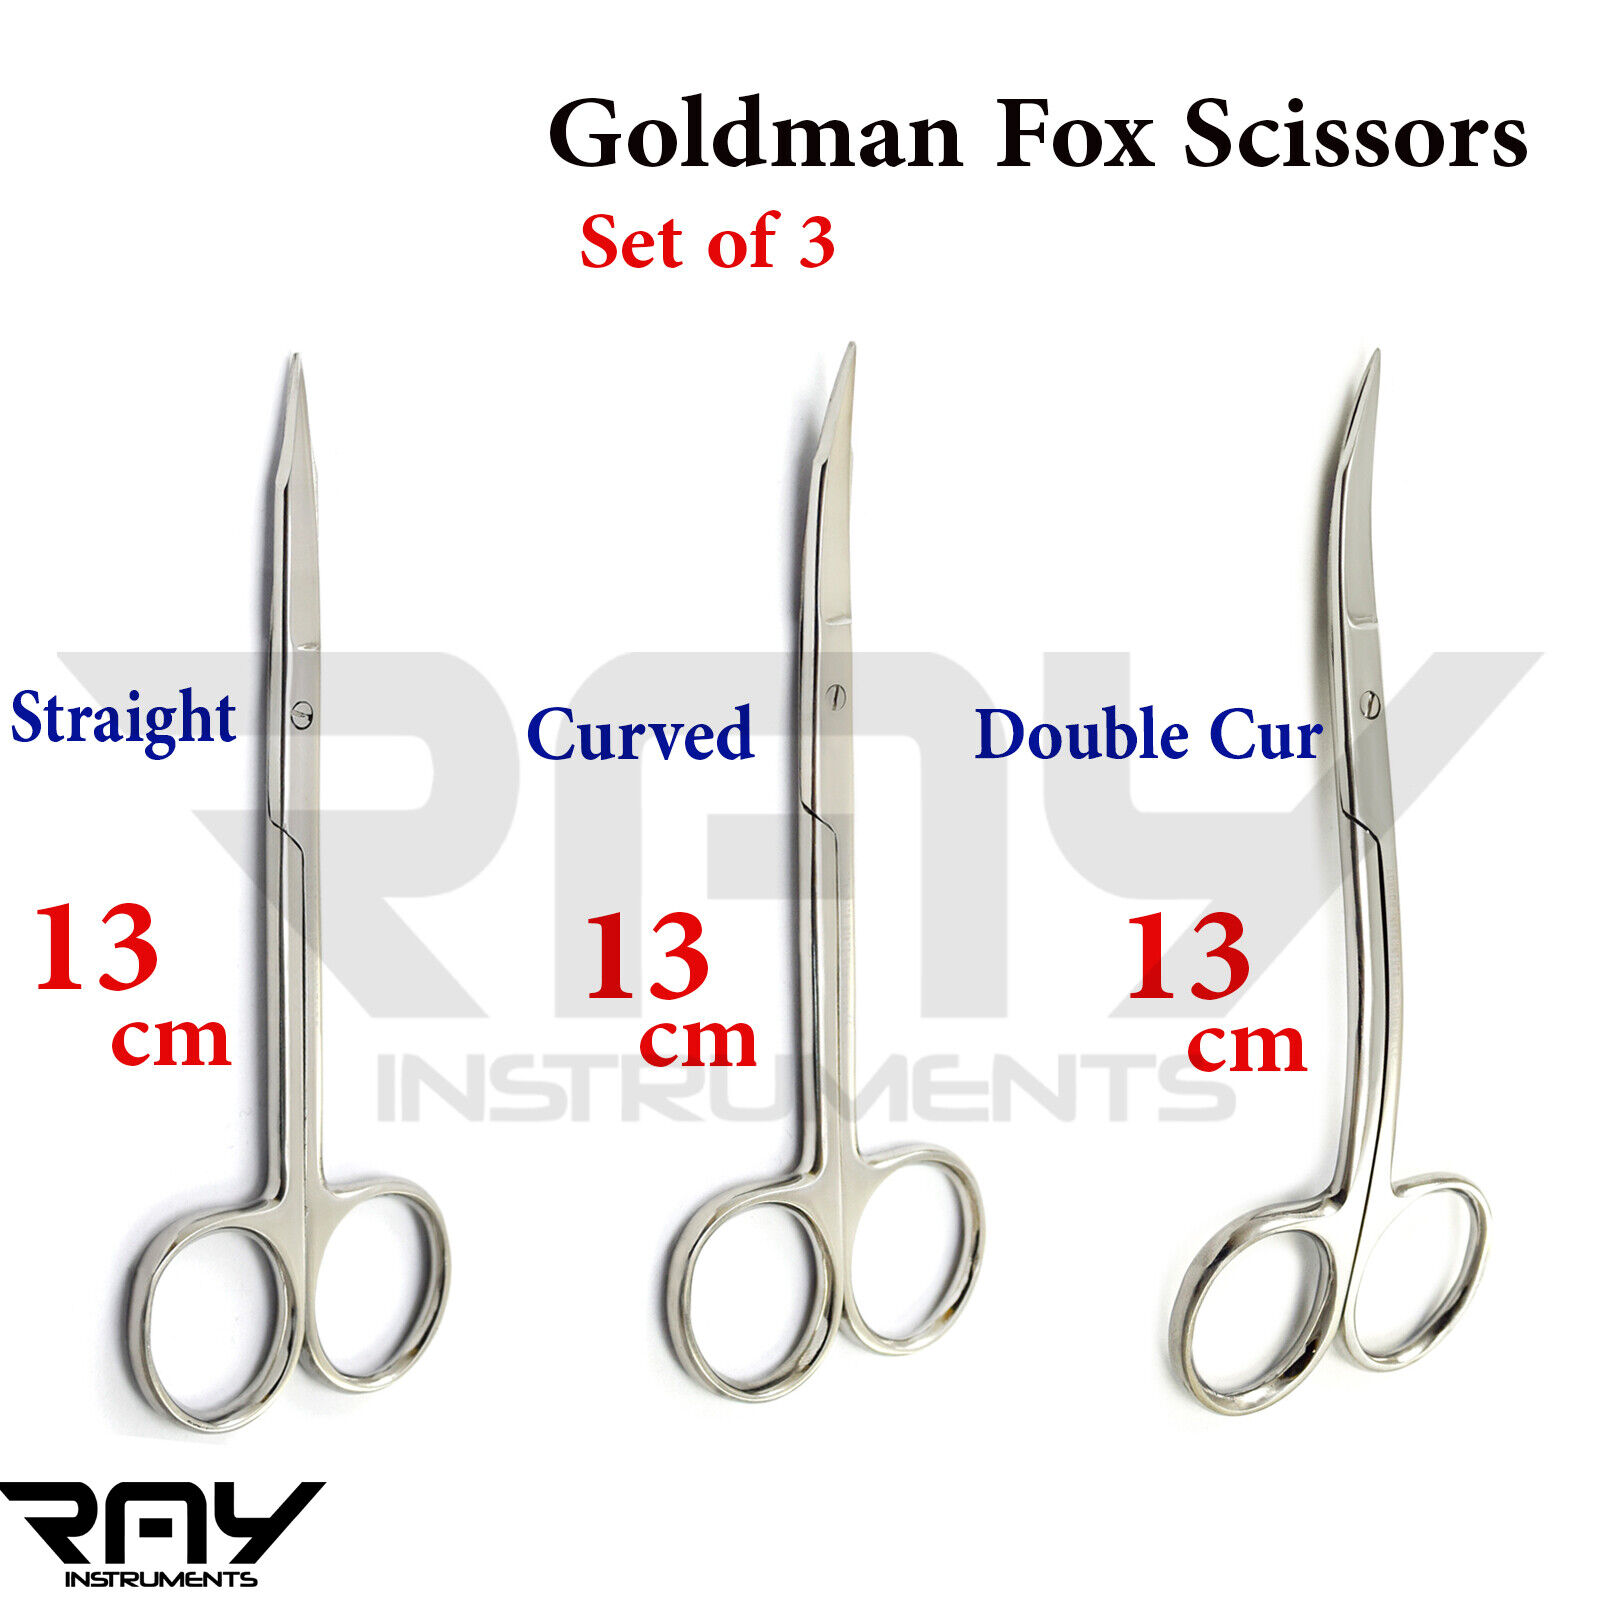 Goldman Fox Scissors Surgical Micro Shears Dissection Super Cut Trimming Tissue 